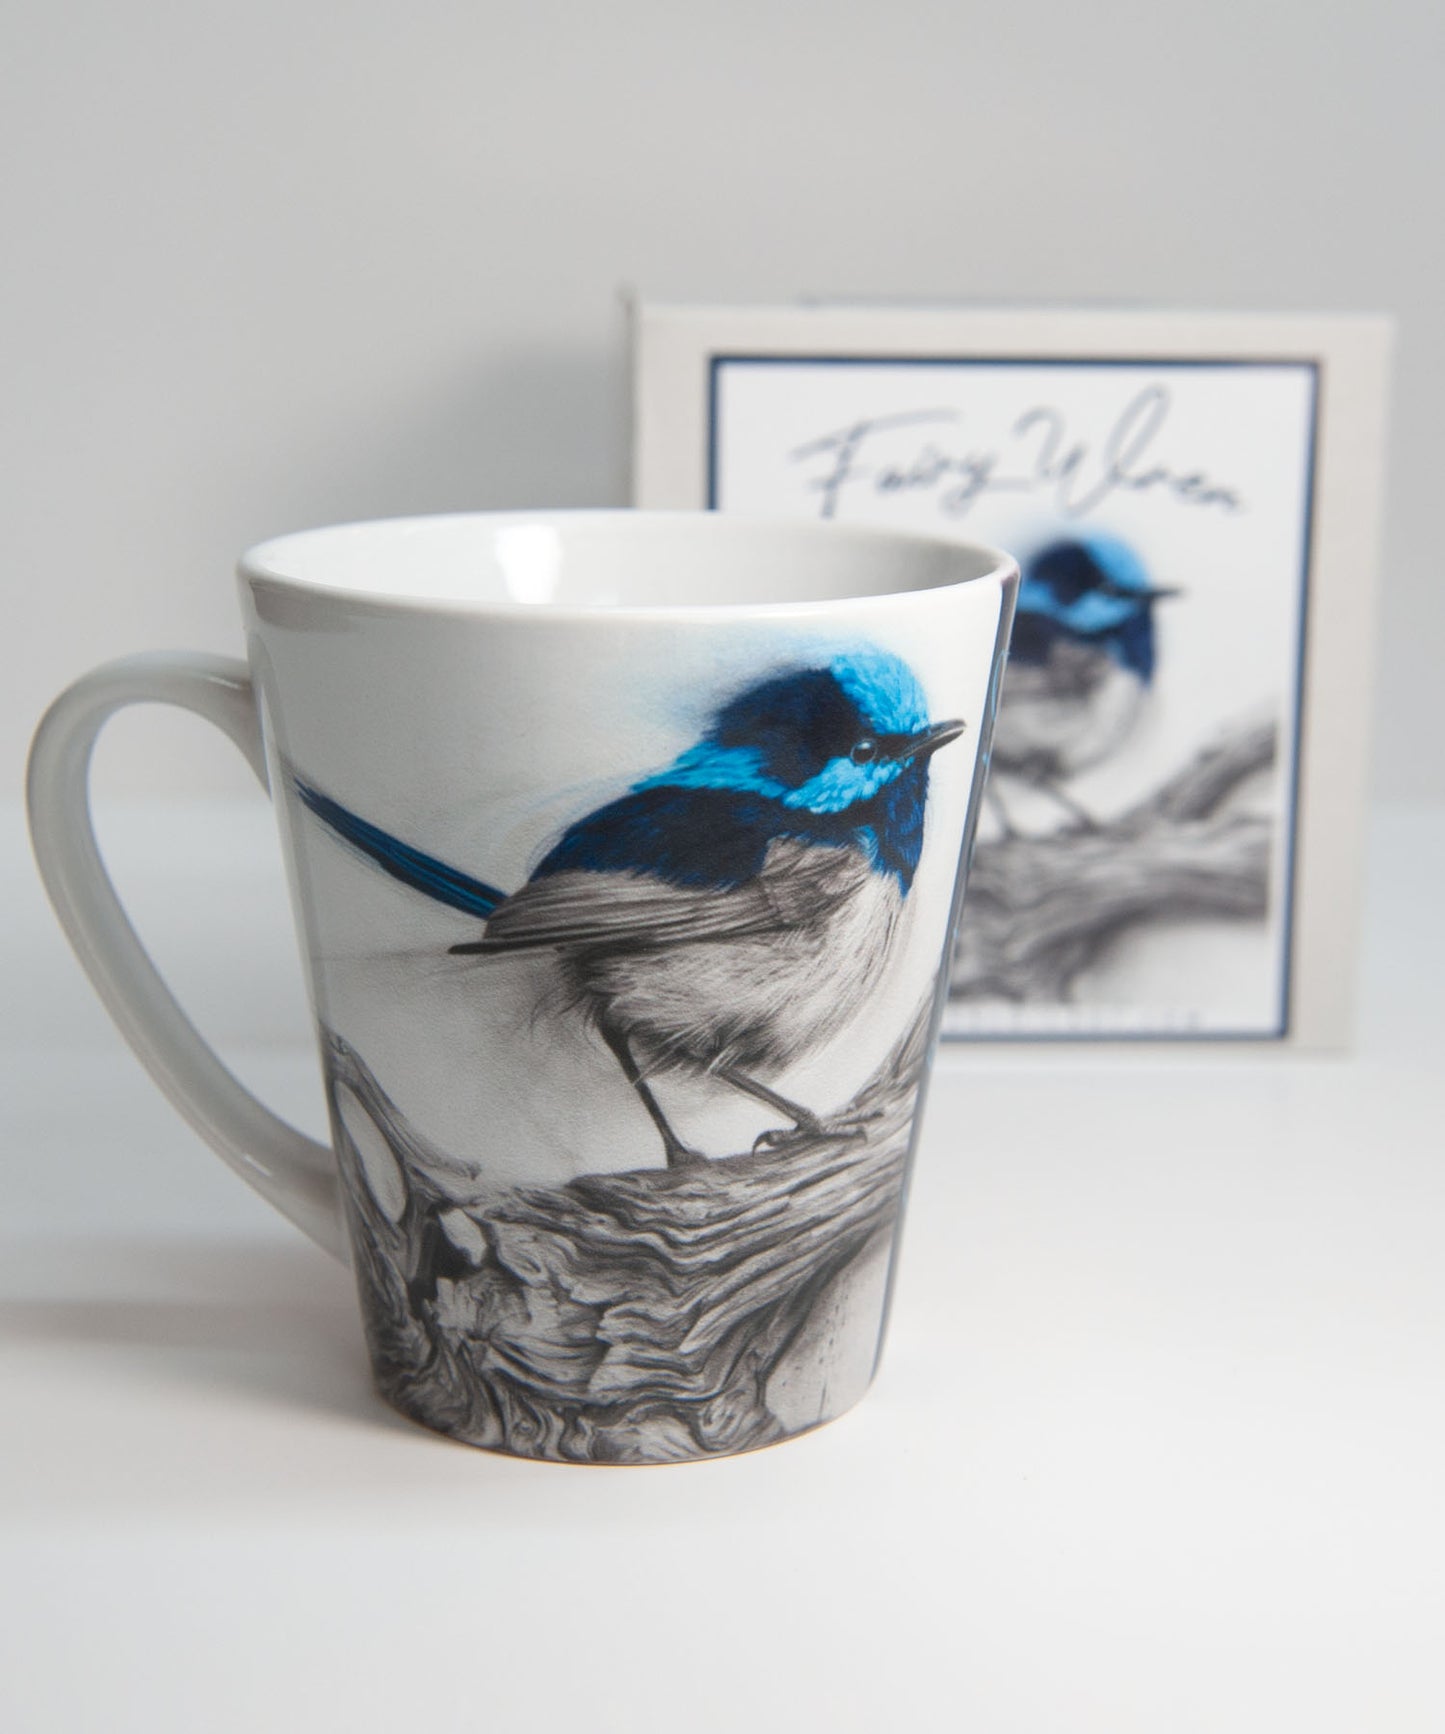 'Fairy Wren' ceramic mug